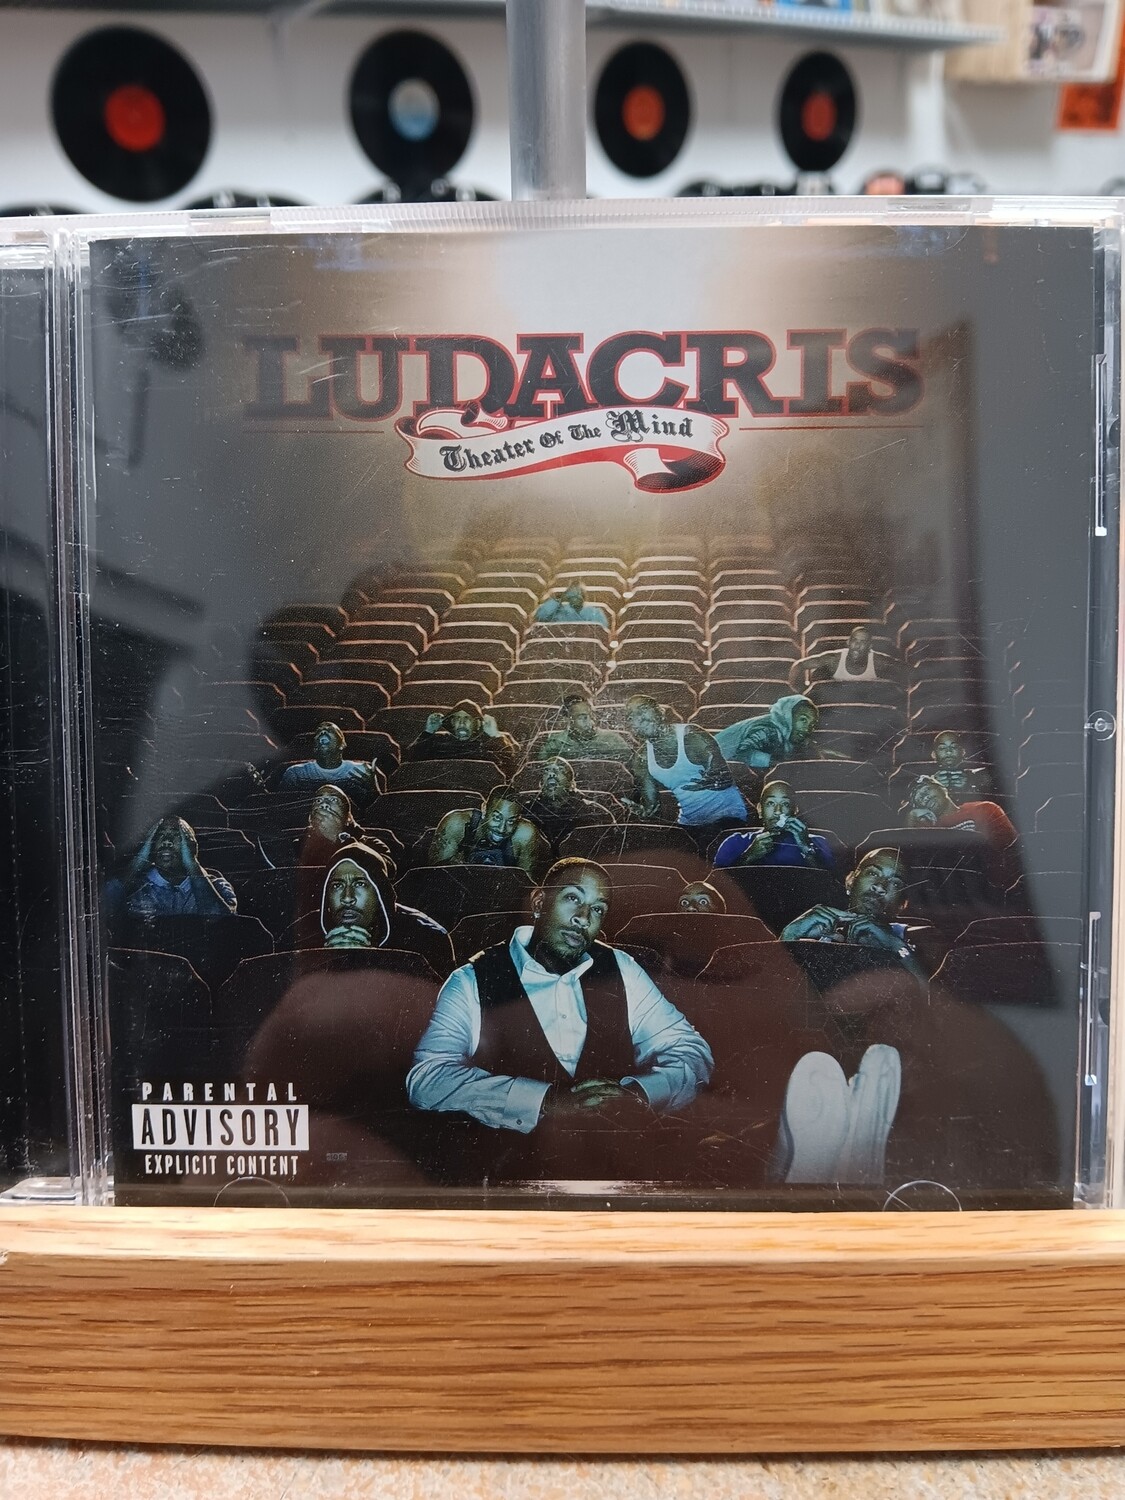 Ludacris - Theater of the mind (CD)